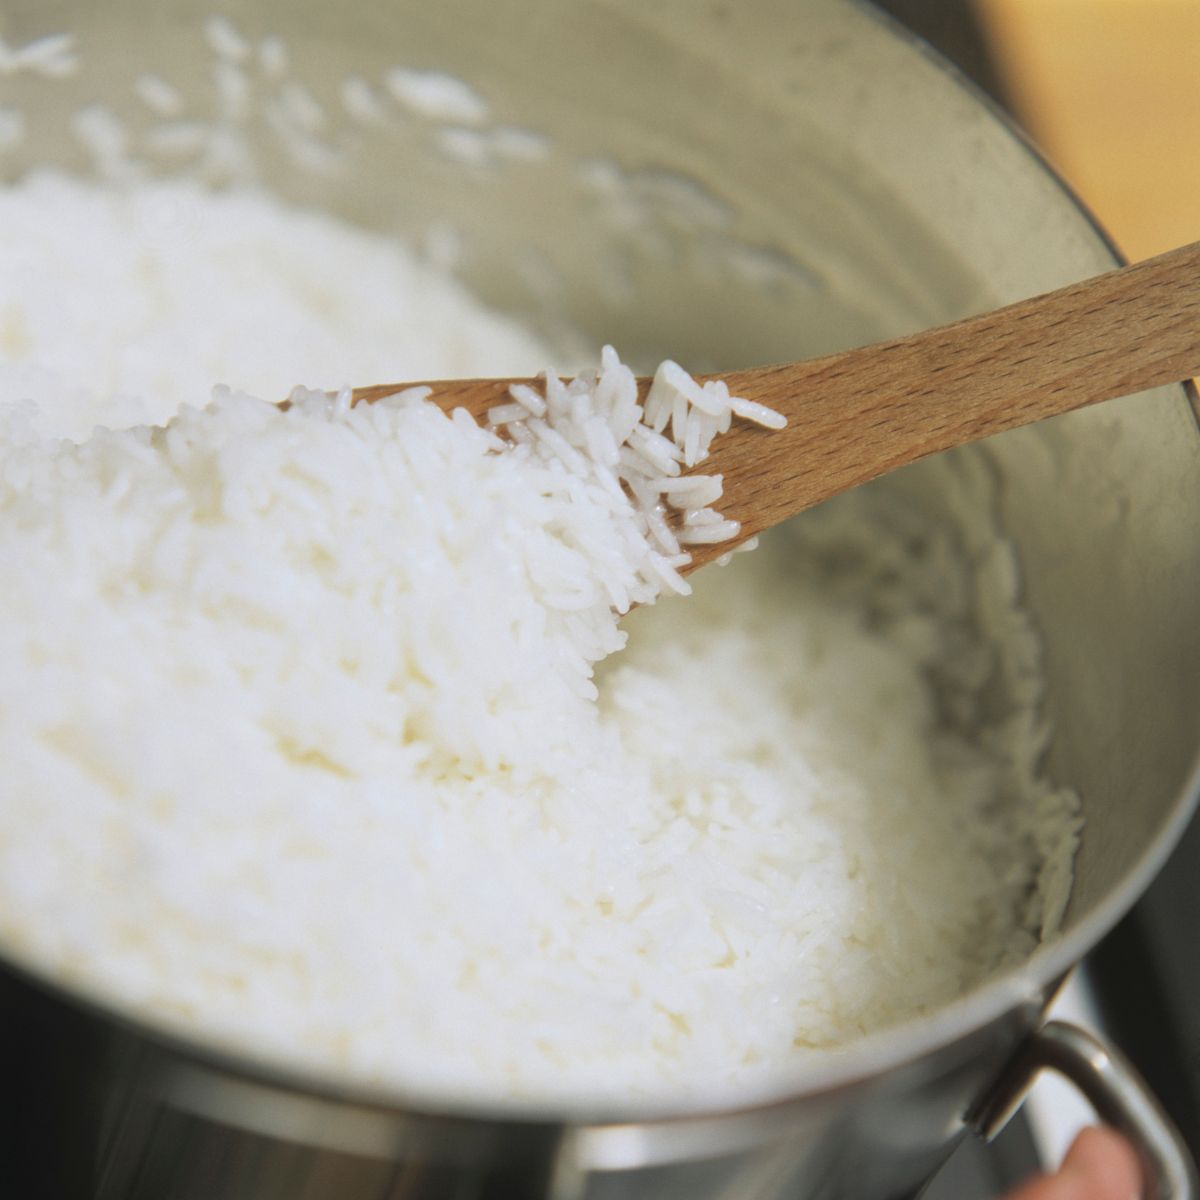 Fried rice recipe, step 1 - make the rice